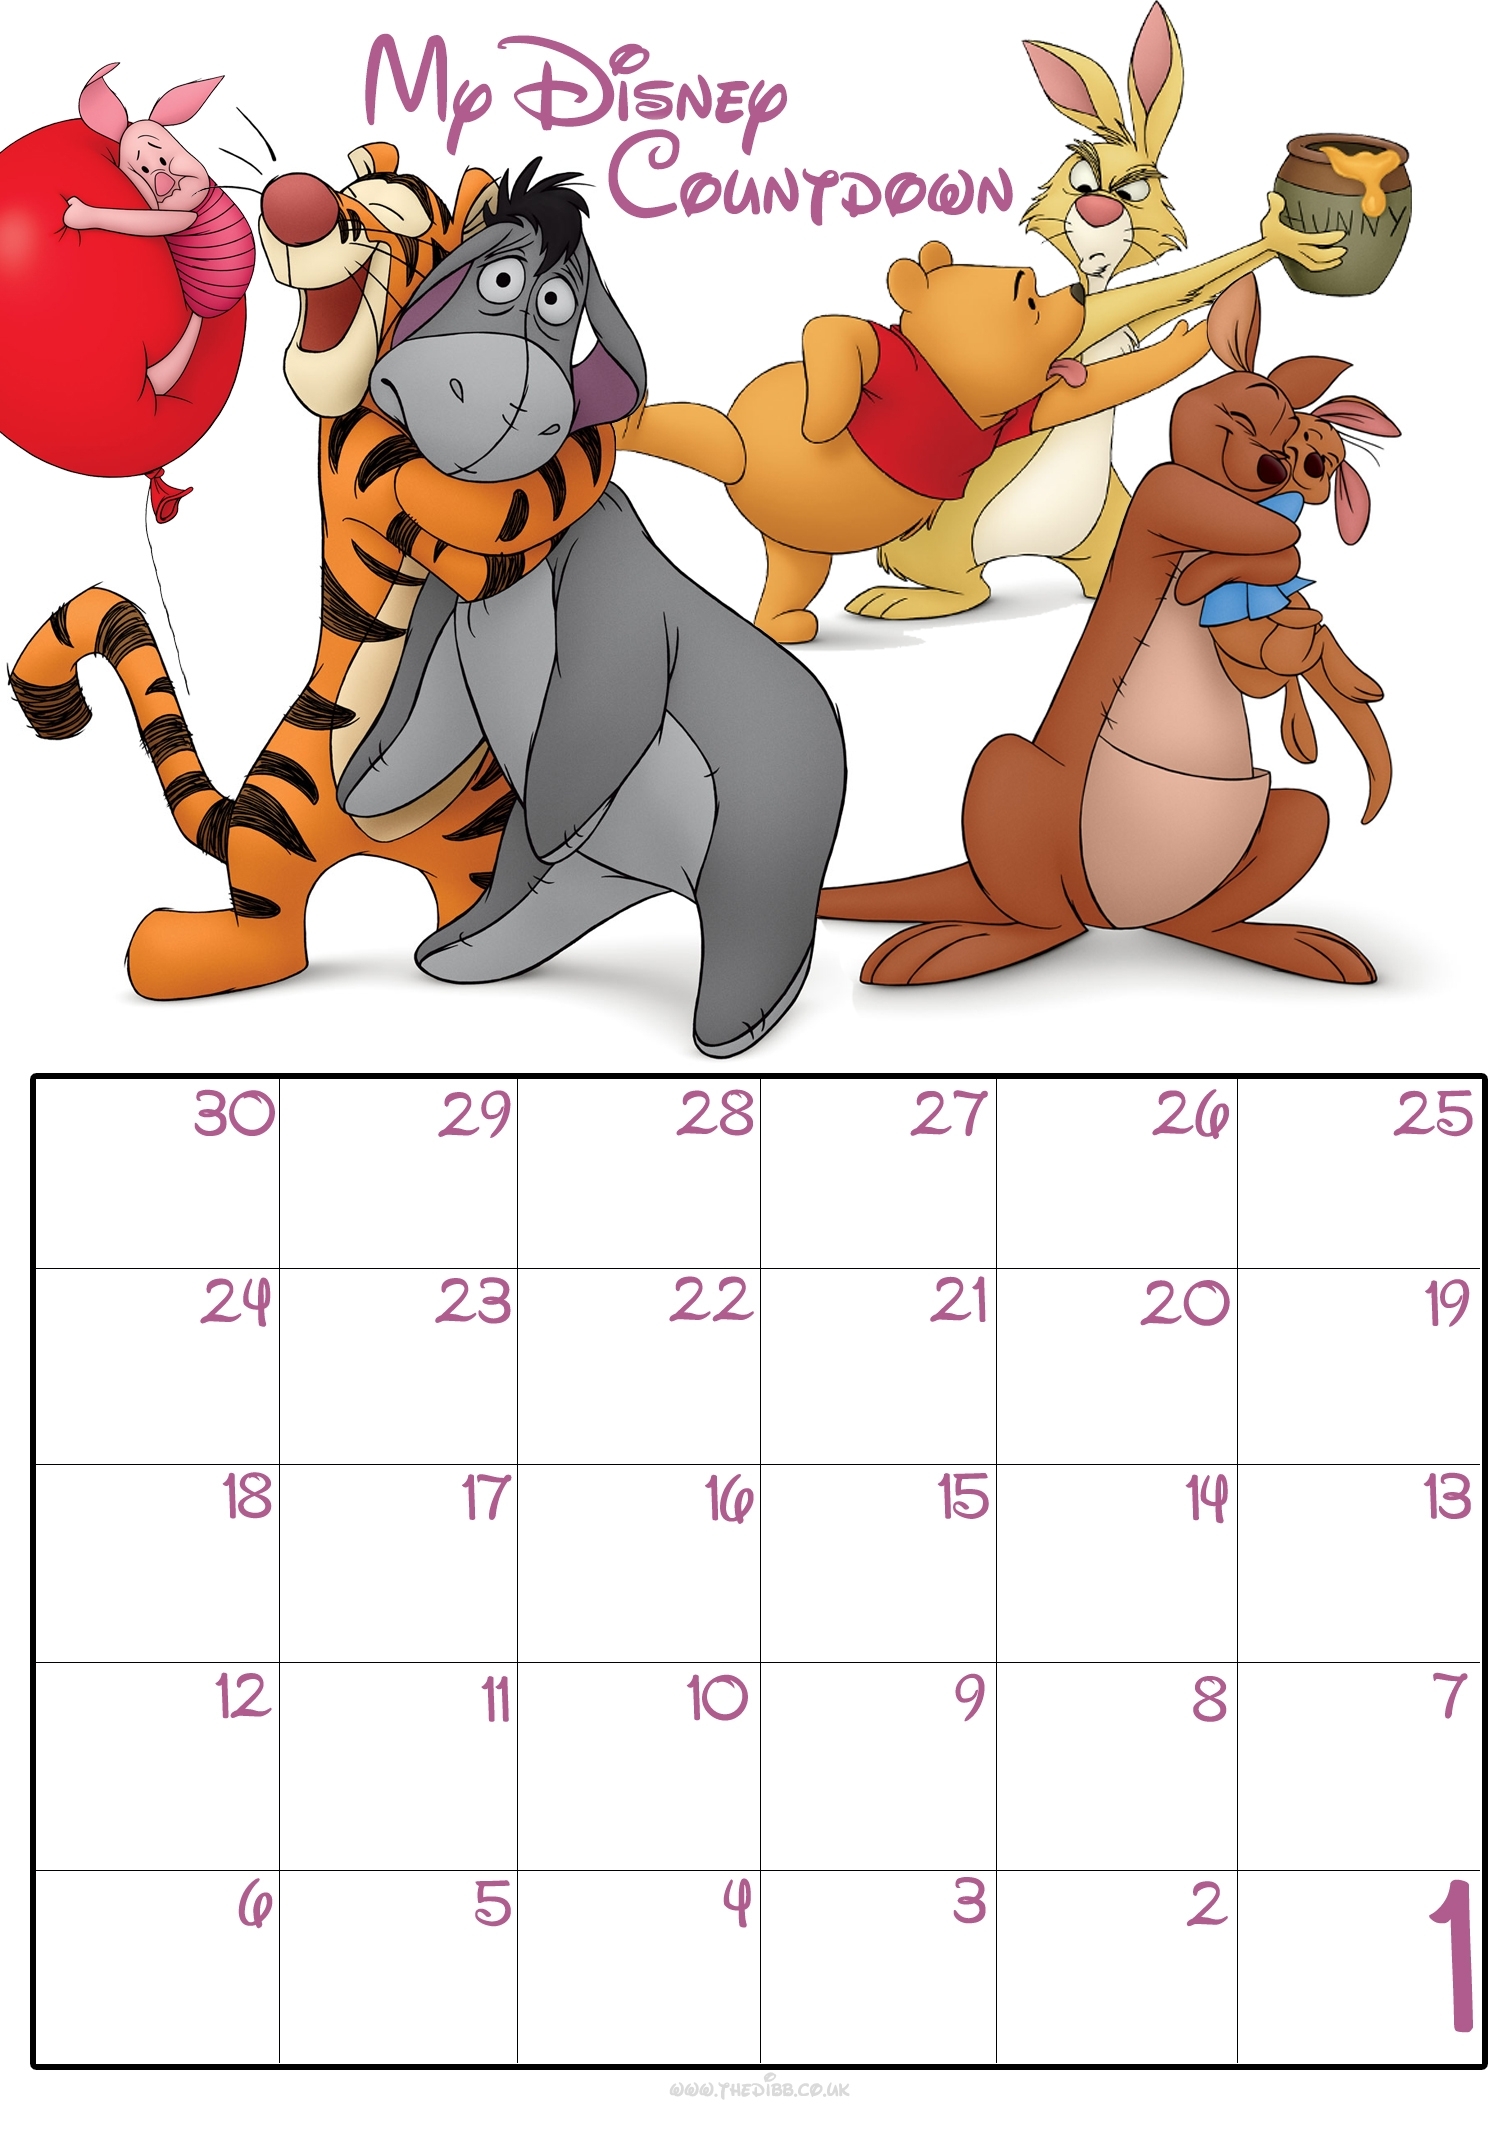 Free Download Free 30 Day Disney Countdown Calendar inside Count Diwn Calendar Fir Disney Cruise